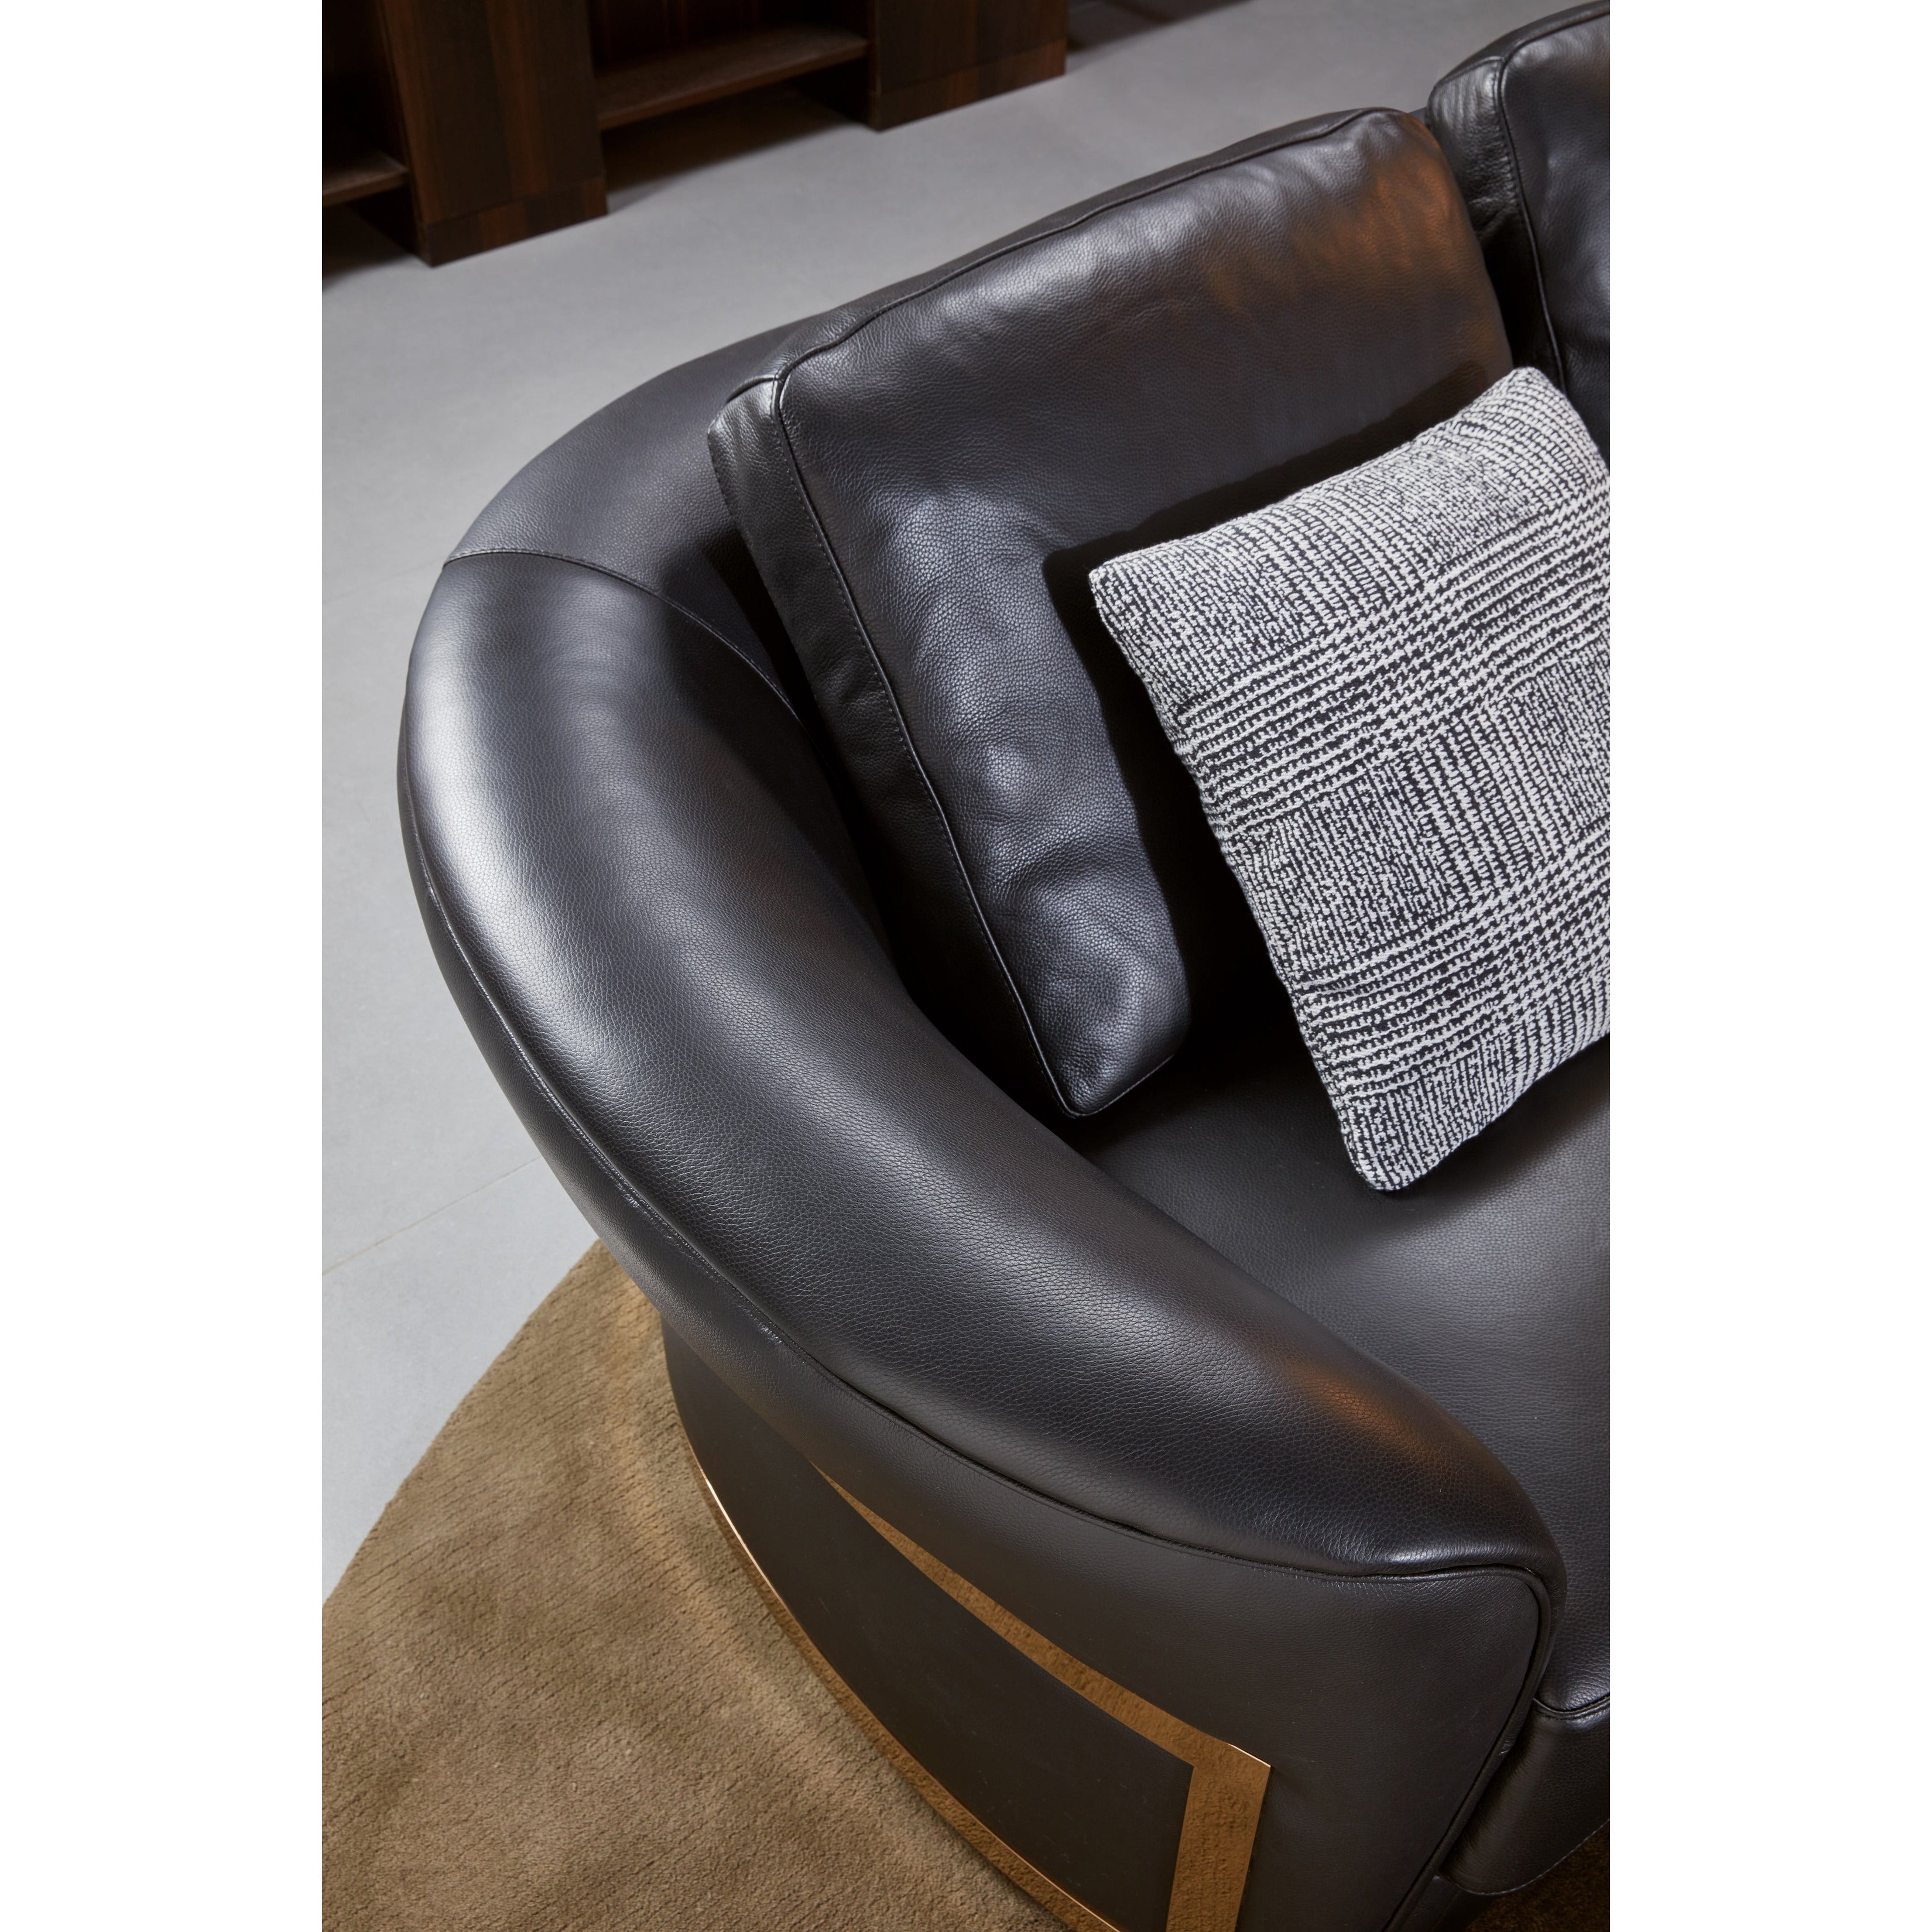 European Furniture - Celine 3 Piece Sofa Set Italian Leather Black - EF-89950 - New Star Living